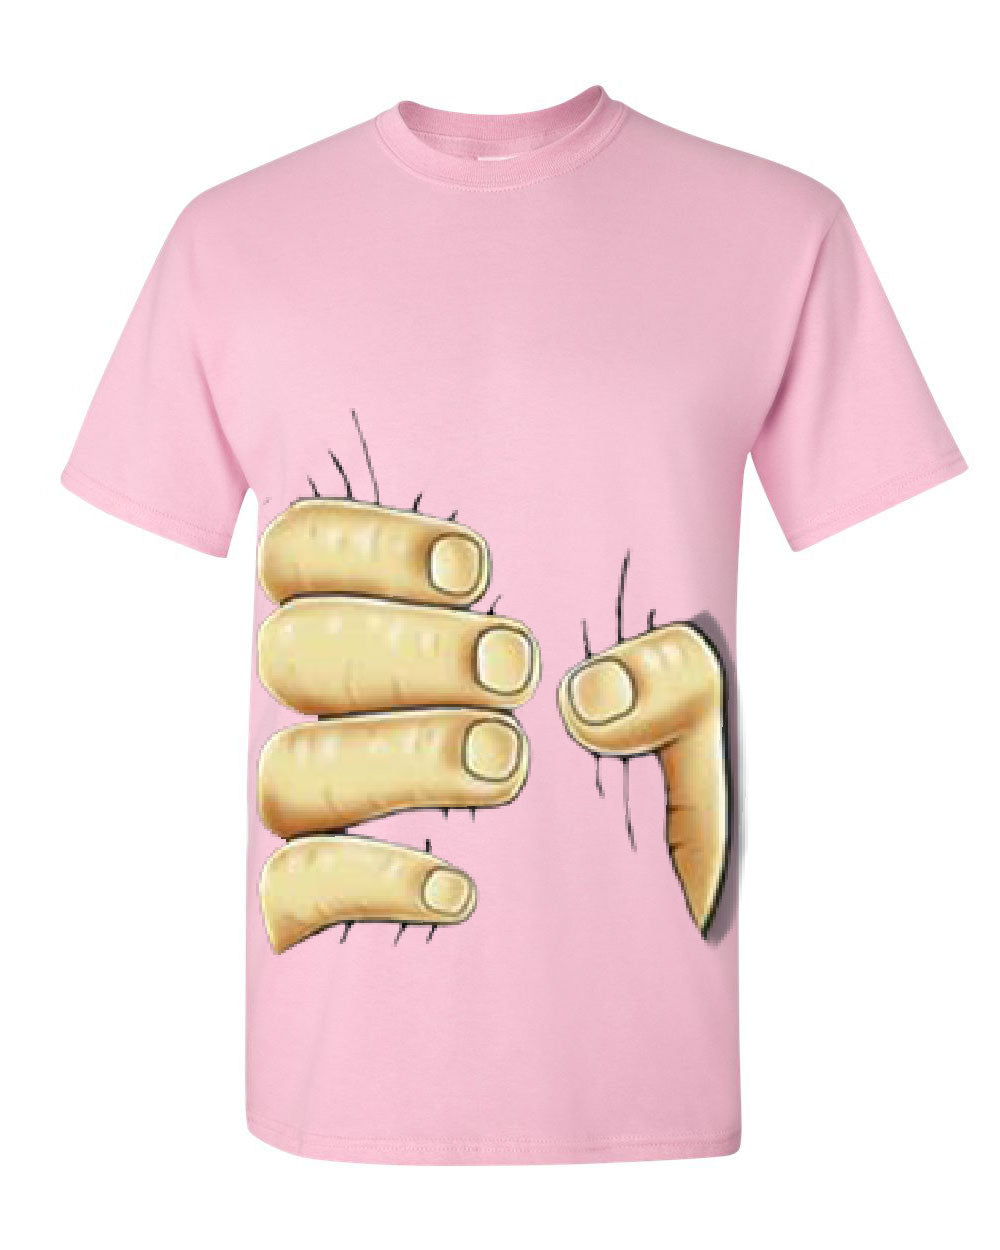 Giant Hand Squeezing T-Shirt Funny Male Hand Grabbing Tee Shirt | eBay